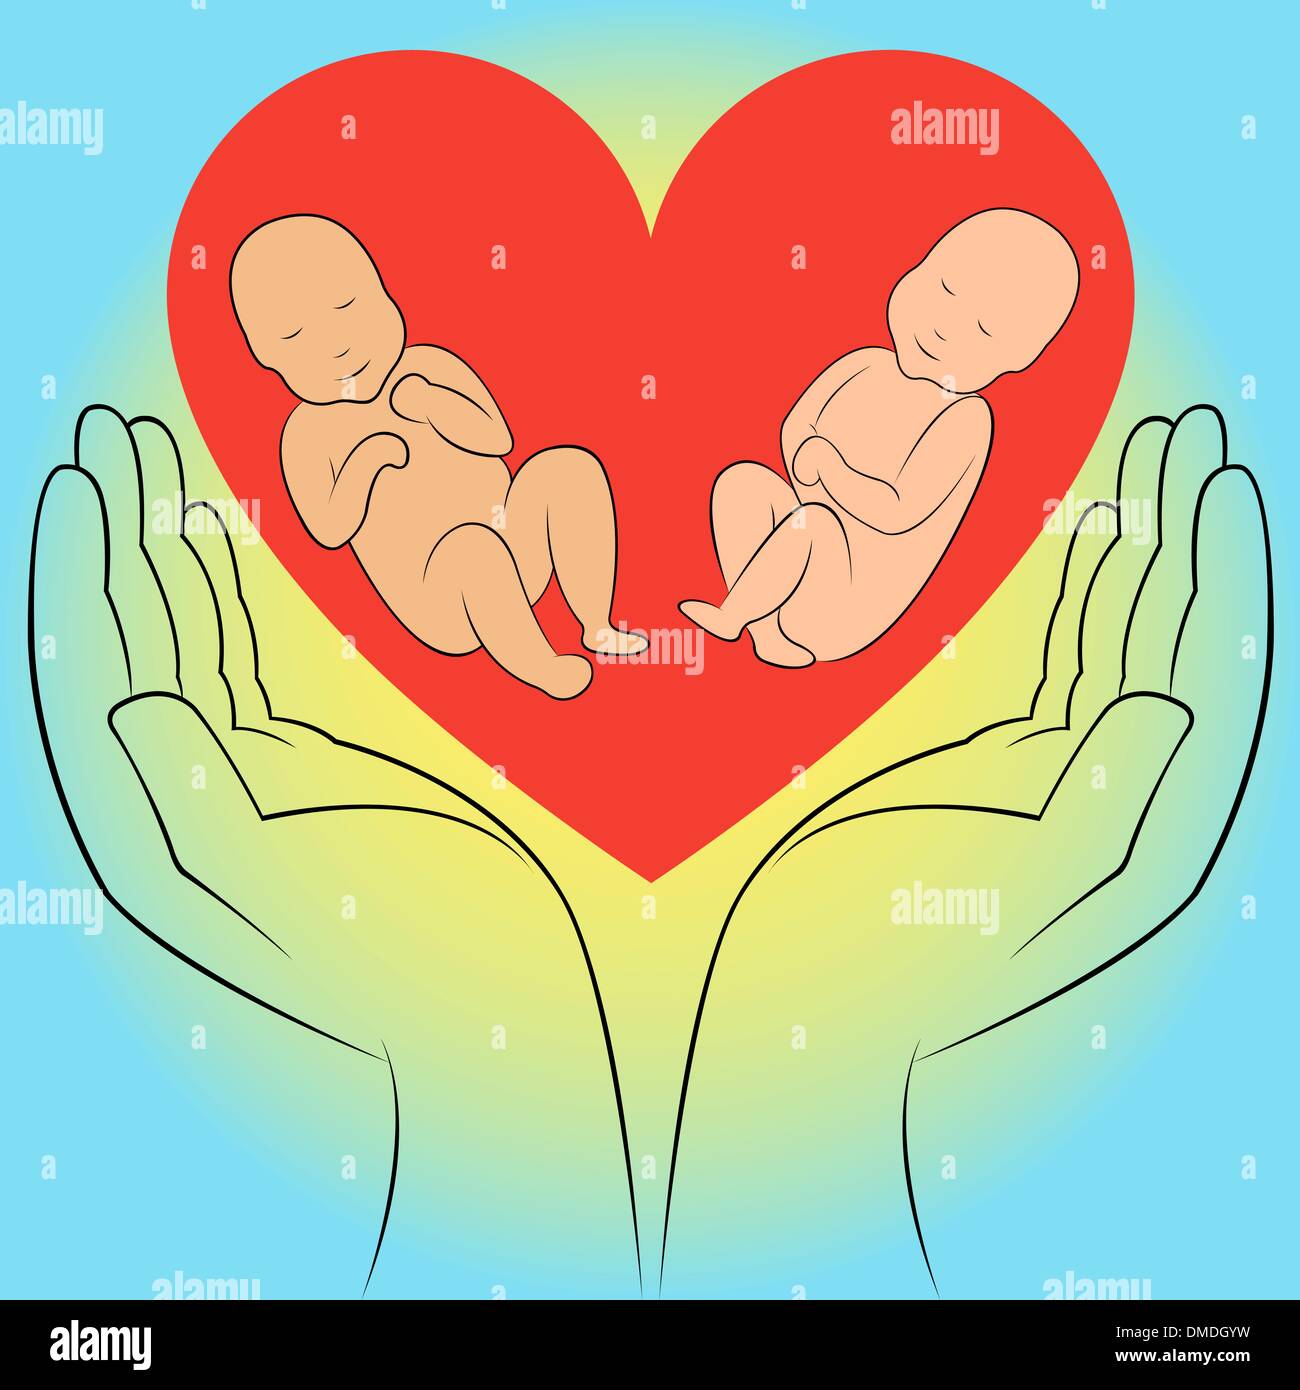 Two Unborn Babies In Human Hands Stock Vector